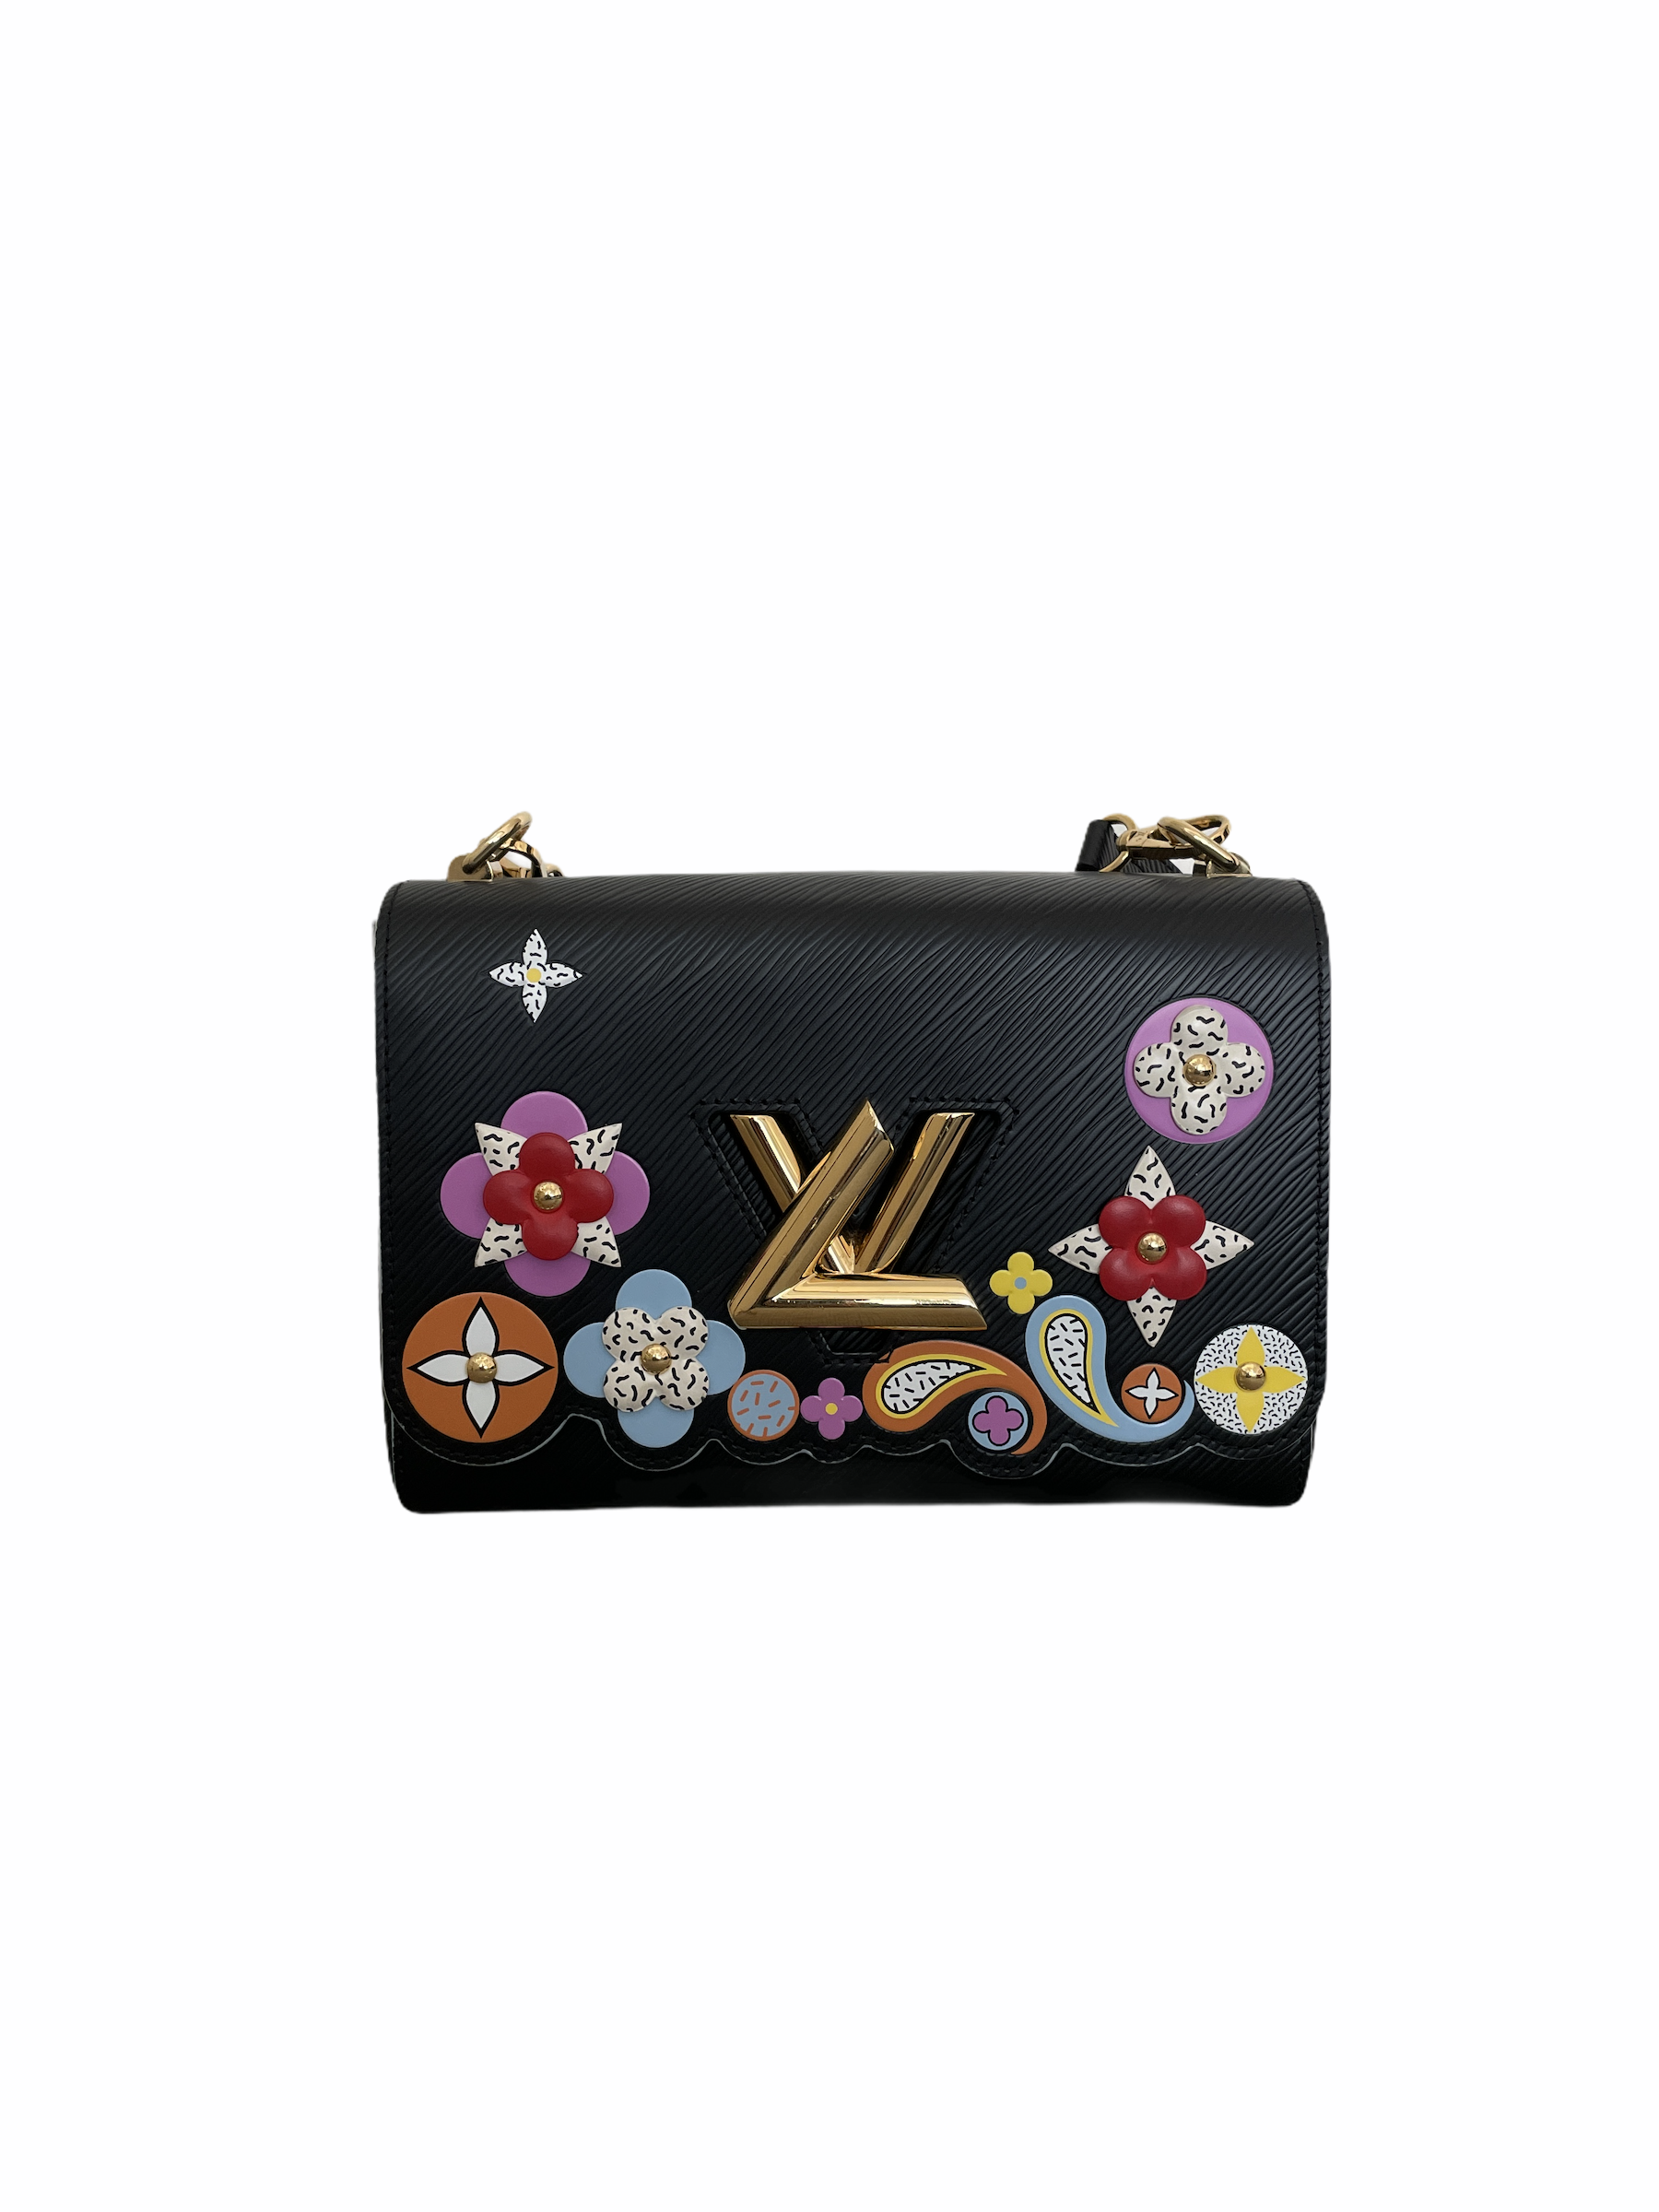 CERTIFIED Louis Vuitton TWIST MM EPI Shoulder Bag M59018 w/ Flower Charms